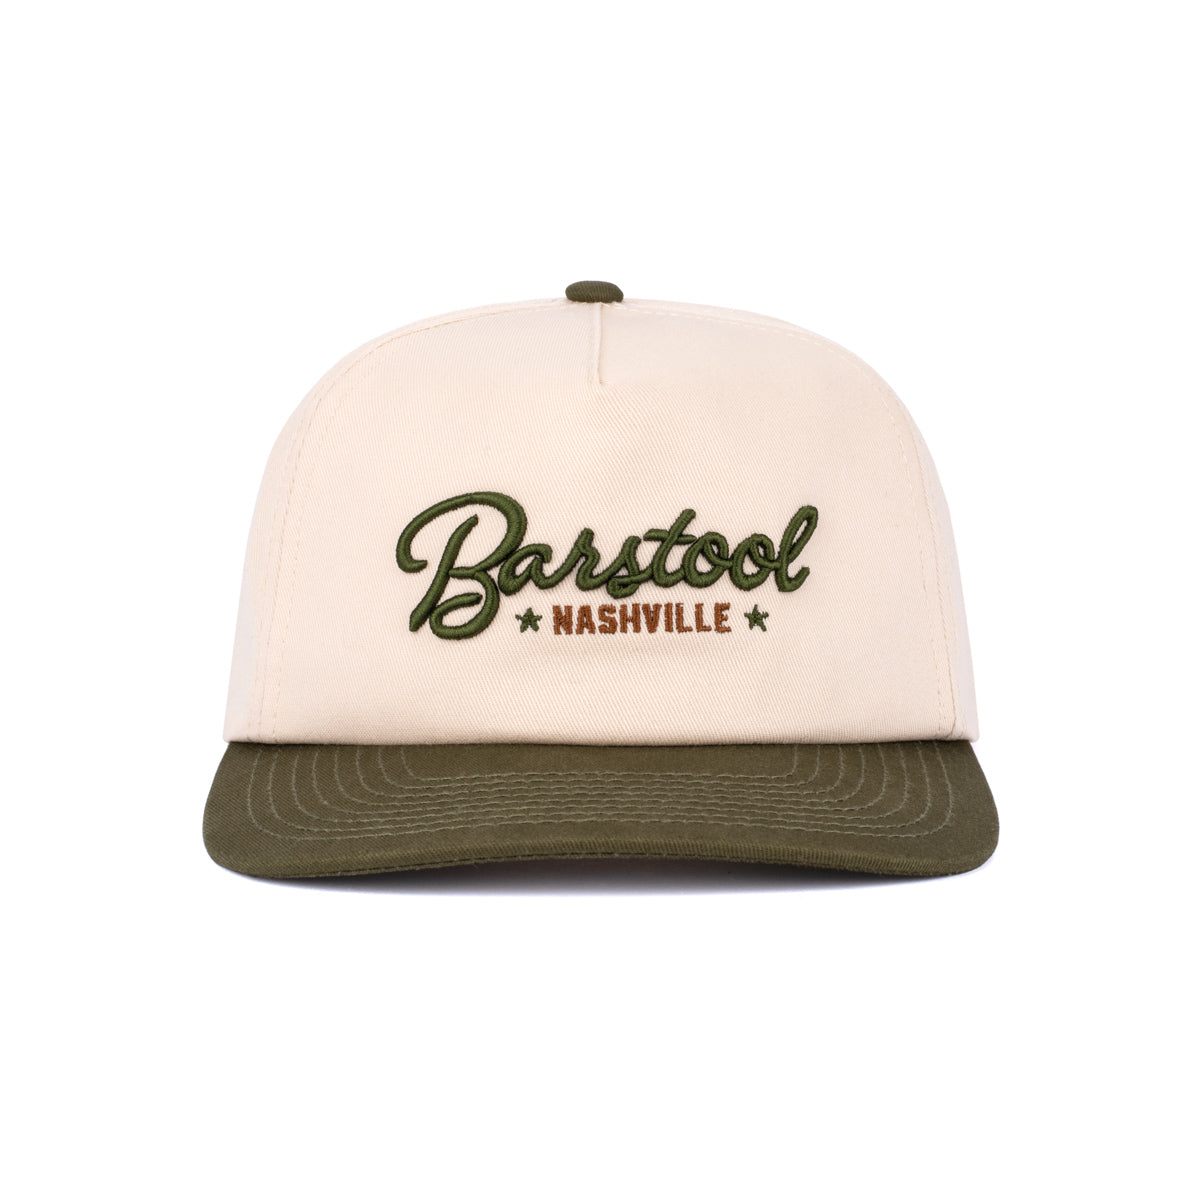 Barstool Nashville Retro Snapback Hat-Hats-Barstool Sports-Cream-One Size-Barstool Sports